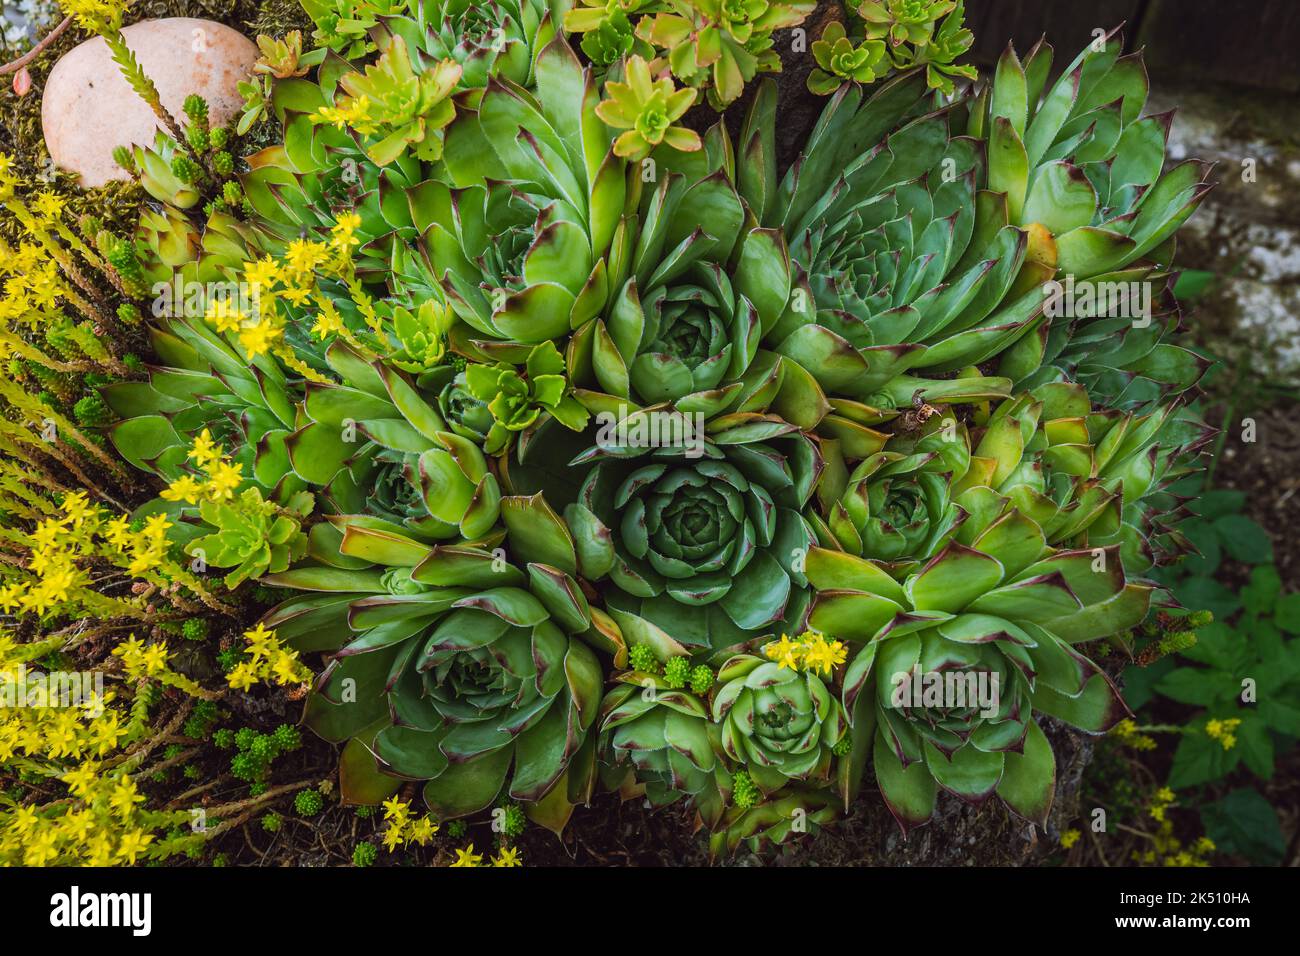 Colorful sempervivum - houseleek varieties sitting close together in the perennial alpine rock garden Stock Photo